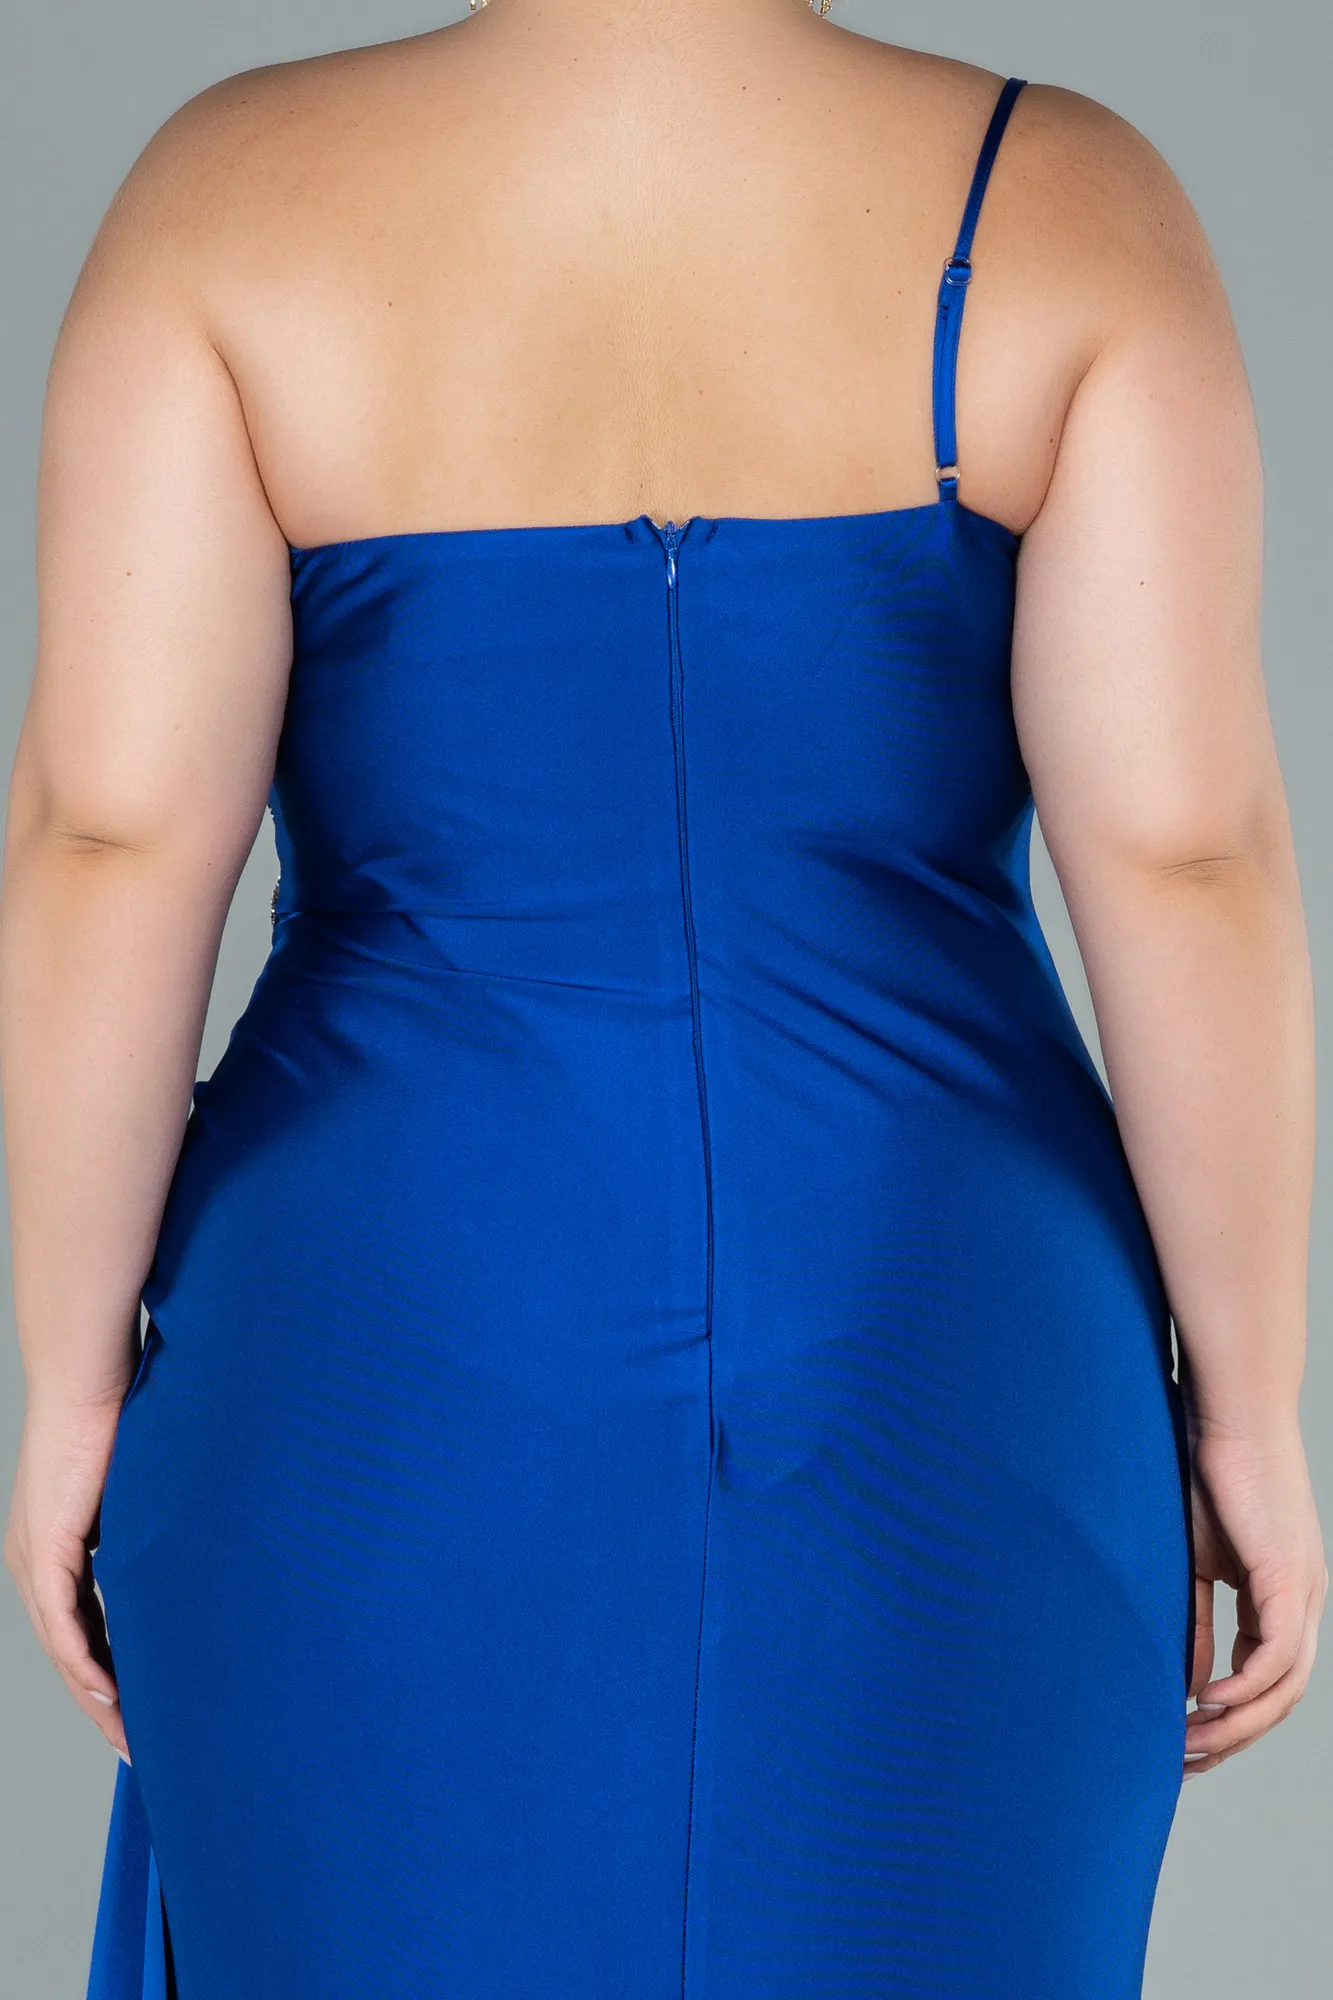 Sax Blue-Long Satin Plus Size Evening Dress ABU2532